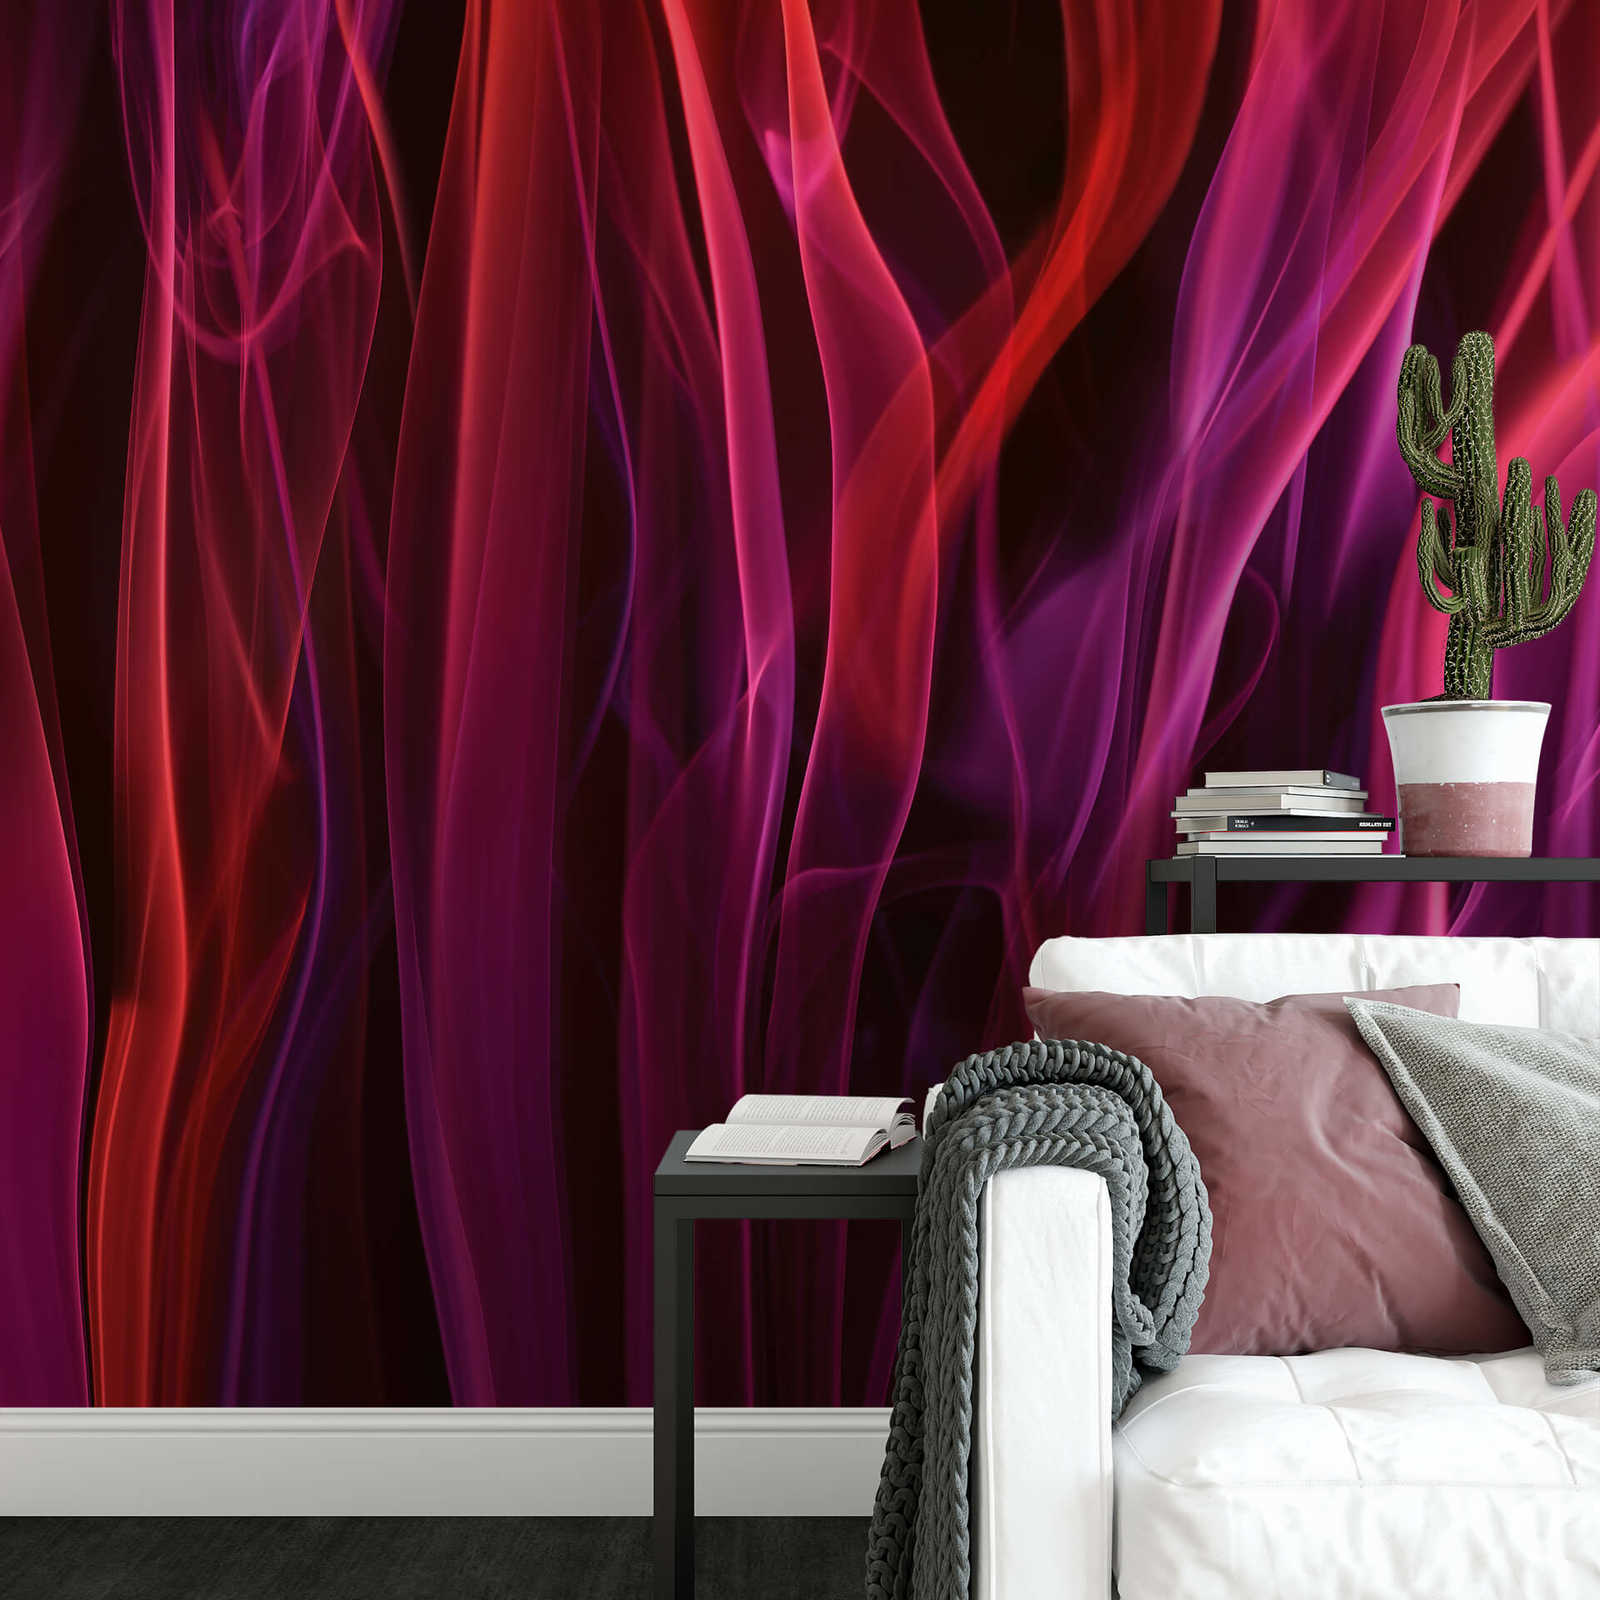             Photo wallpaper red smoke - red, purple, black
        